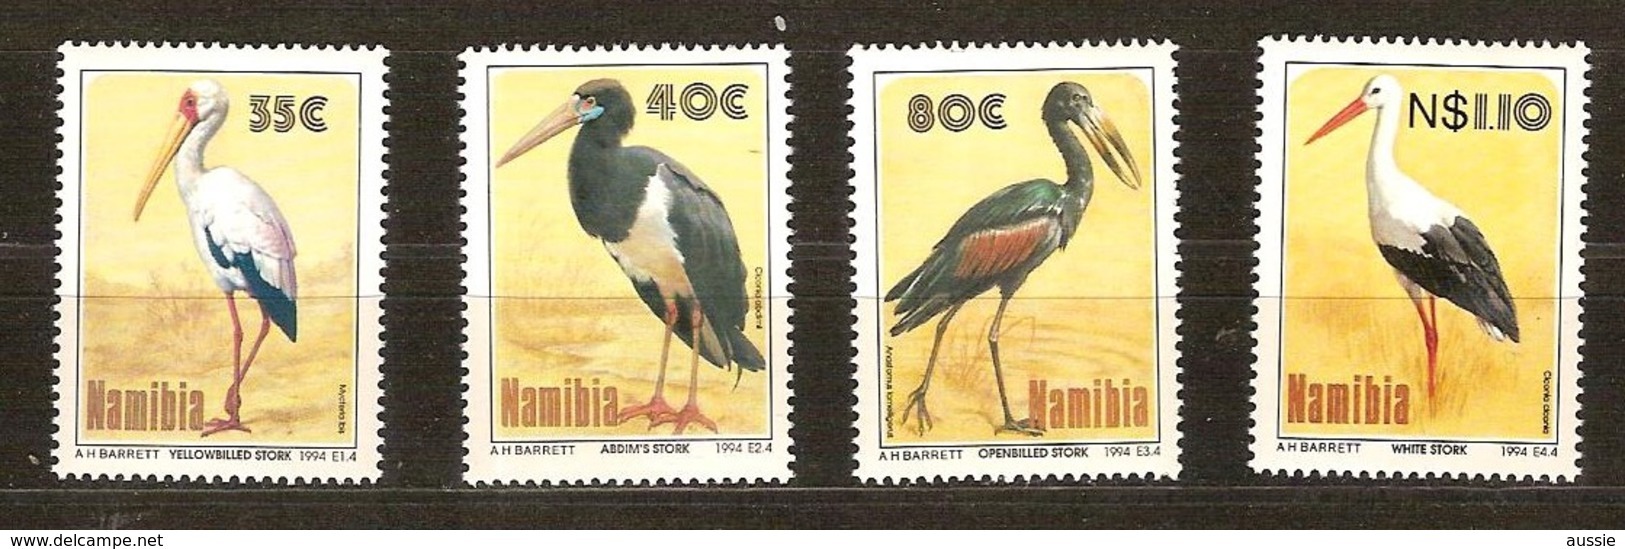 Namibia Namibie 1994 Yvertnr 732-735 *** MNH Cote 20 FF Faune Oiseaux Vogels Birds - Namibie (1990- ...)